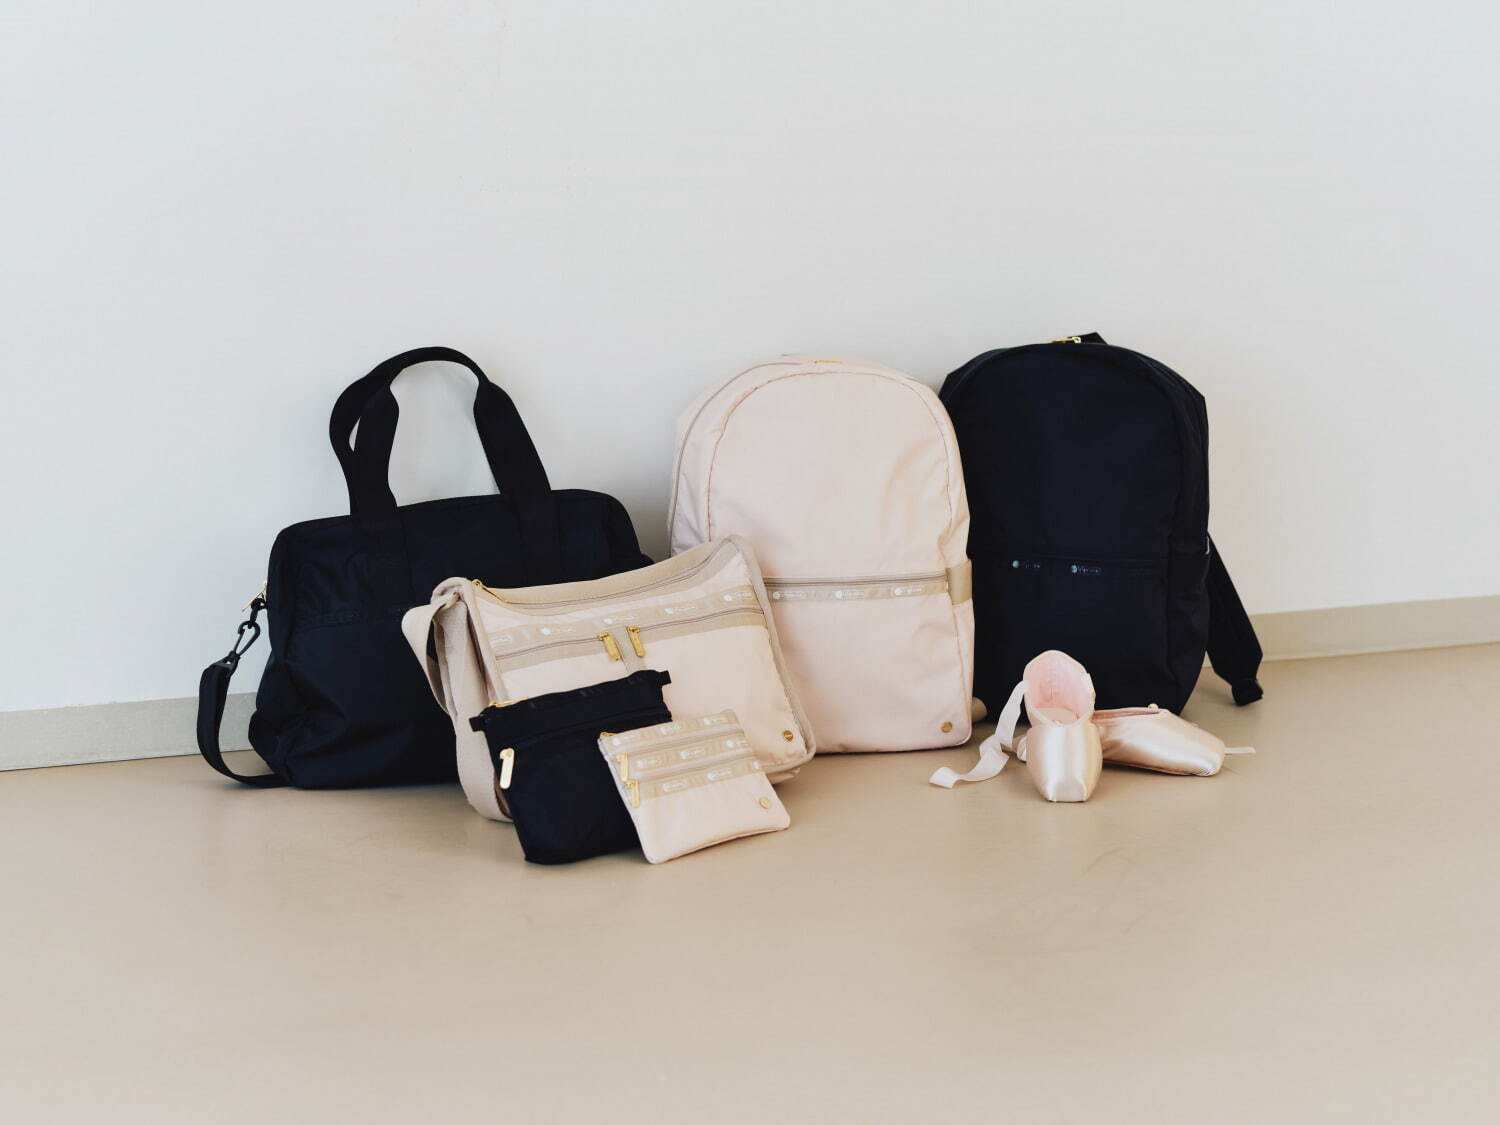 Carrier Backpack WP 22,000円、Harper Bag WP 19,800円、DLX Everyday Bag WP 19,250円
Cosmetic Clutch 3,960円、3 Zip Cosmetic 3,630円